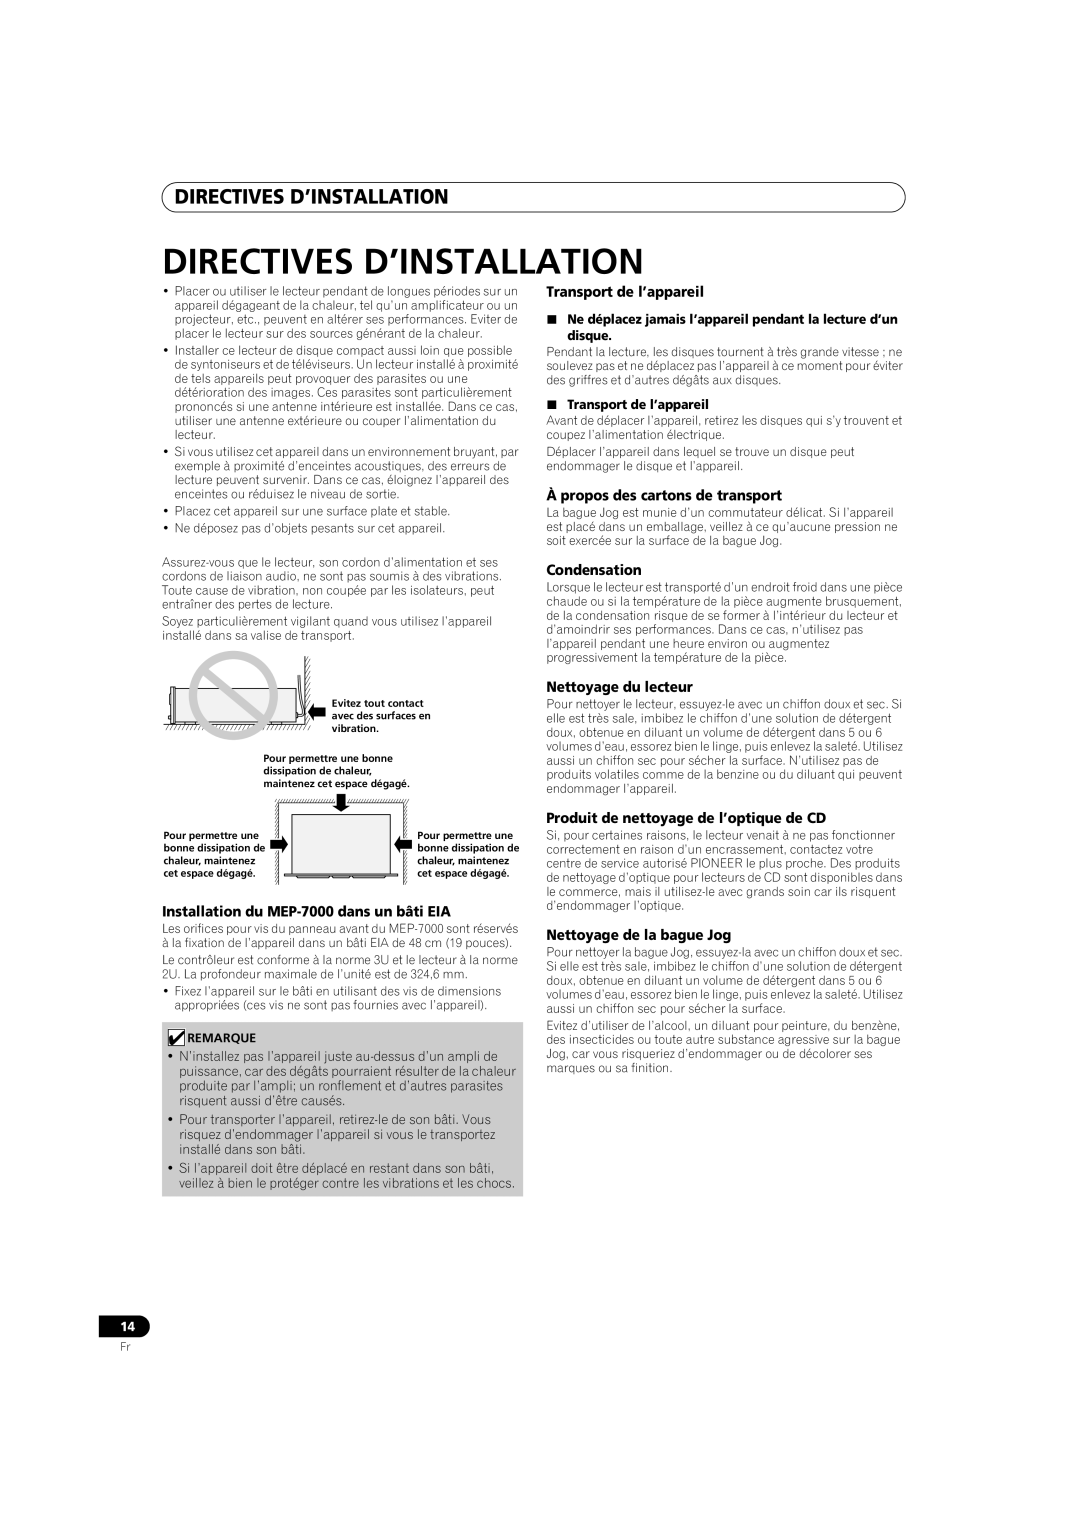 Pioneer MEP-7000 operating instructions Directives D’Installation, disque, Transport de l’appareil 